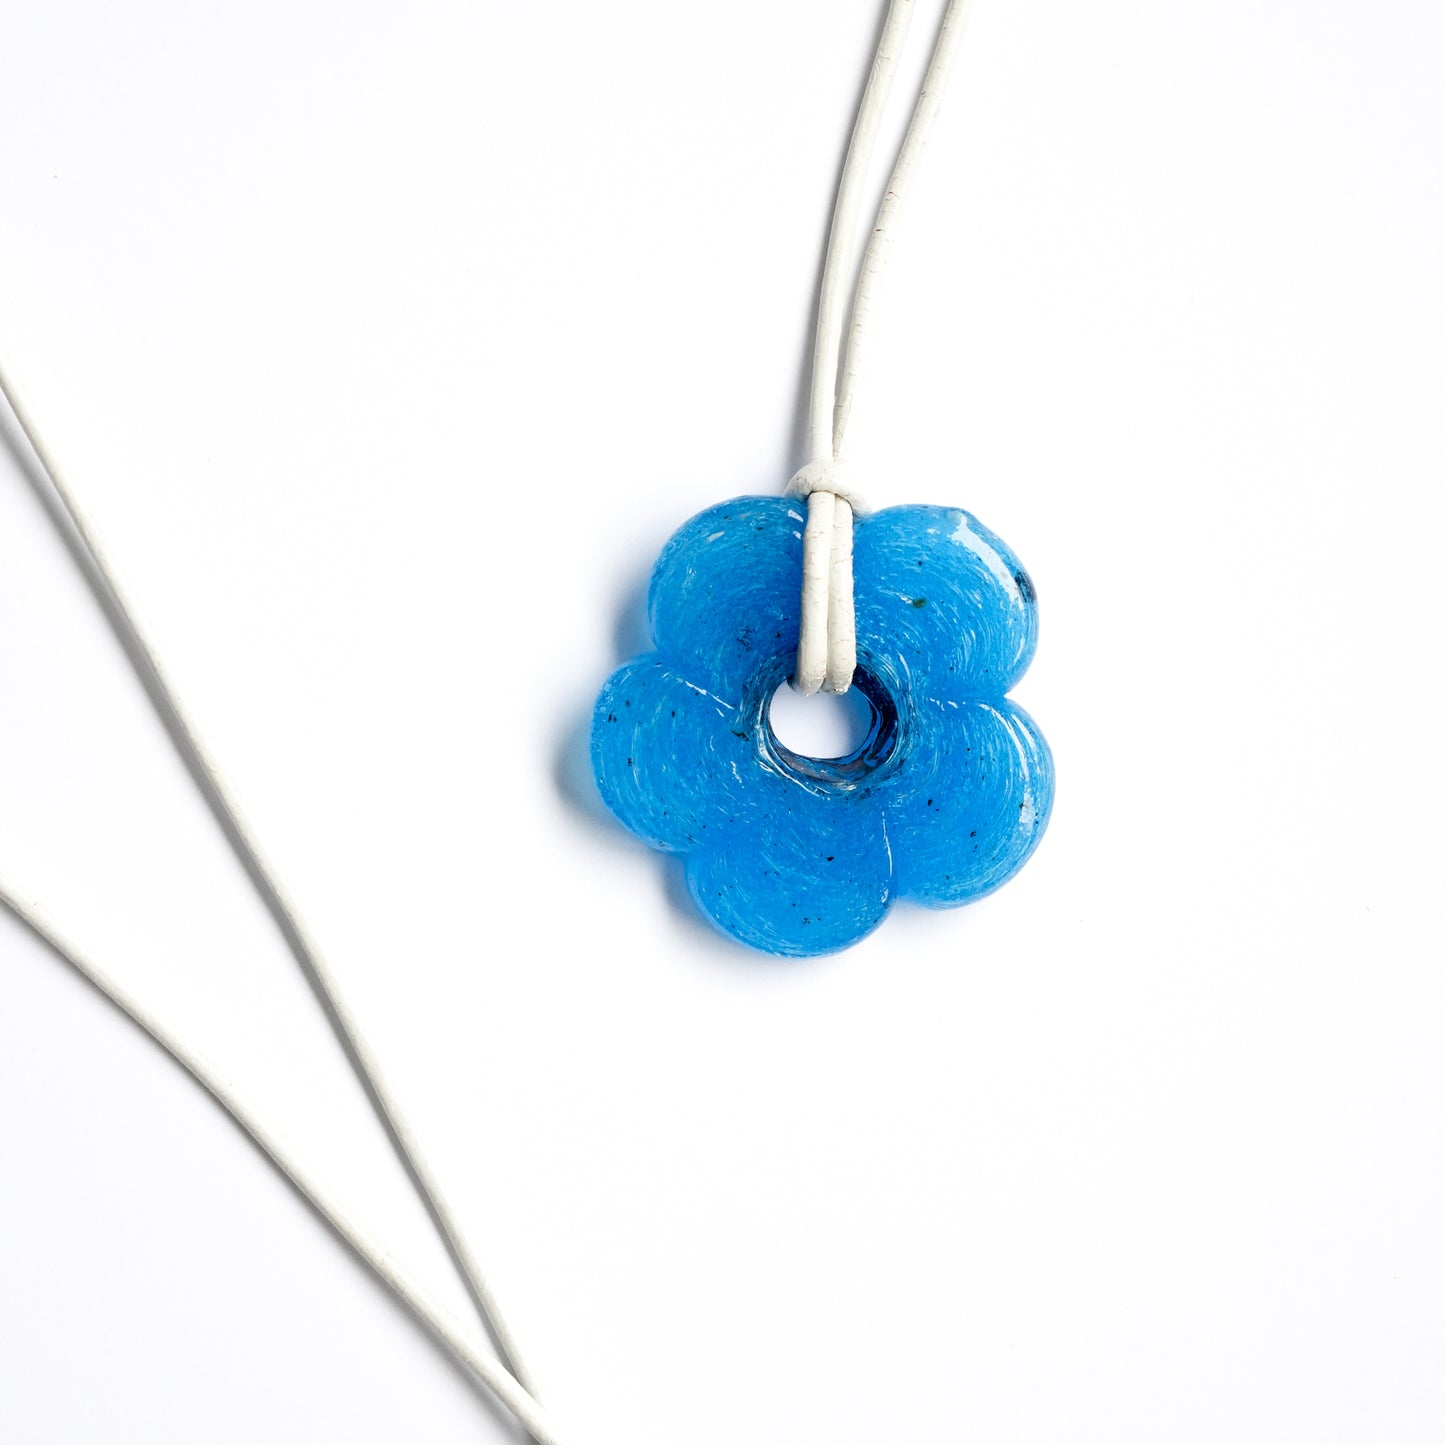 Blue Flower Necklace